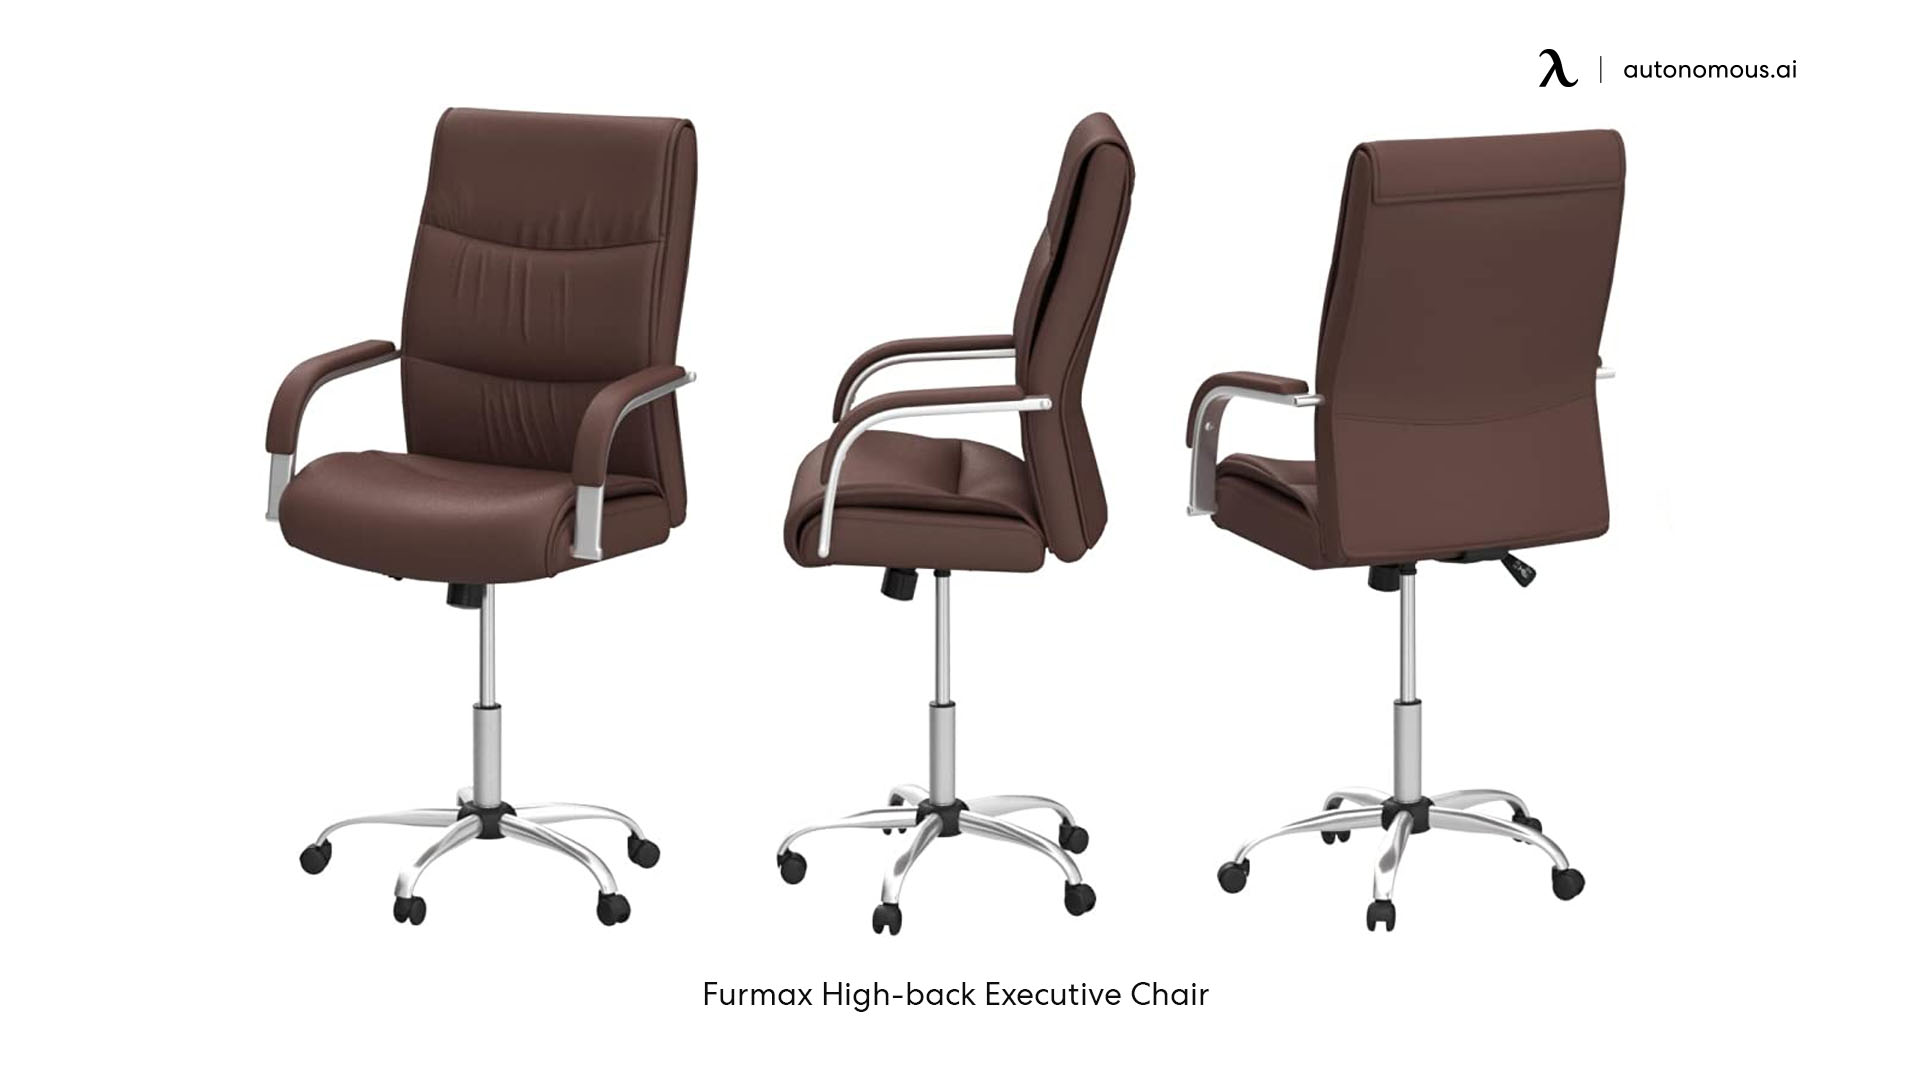 Furmax High-back Executive Chair